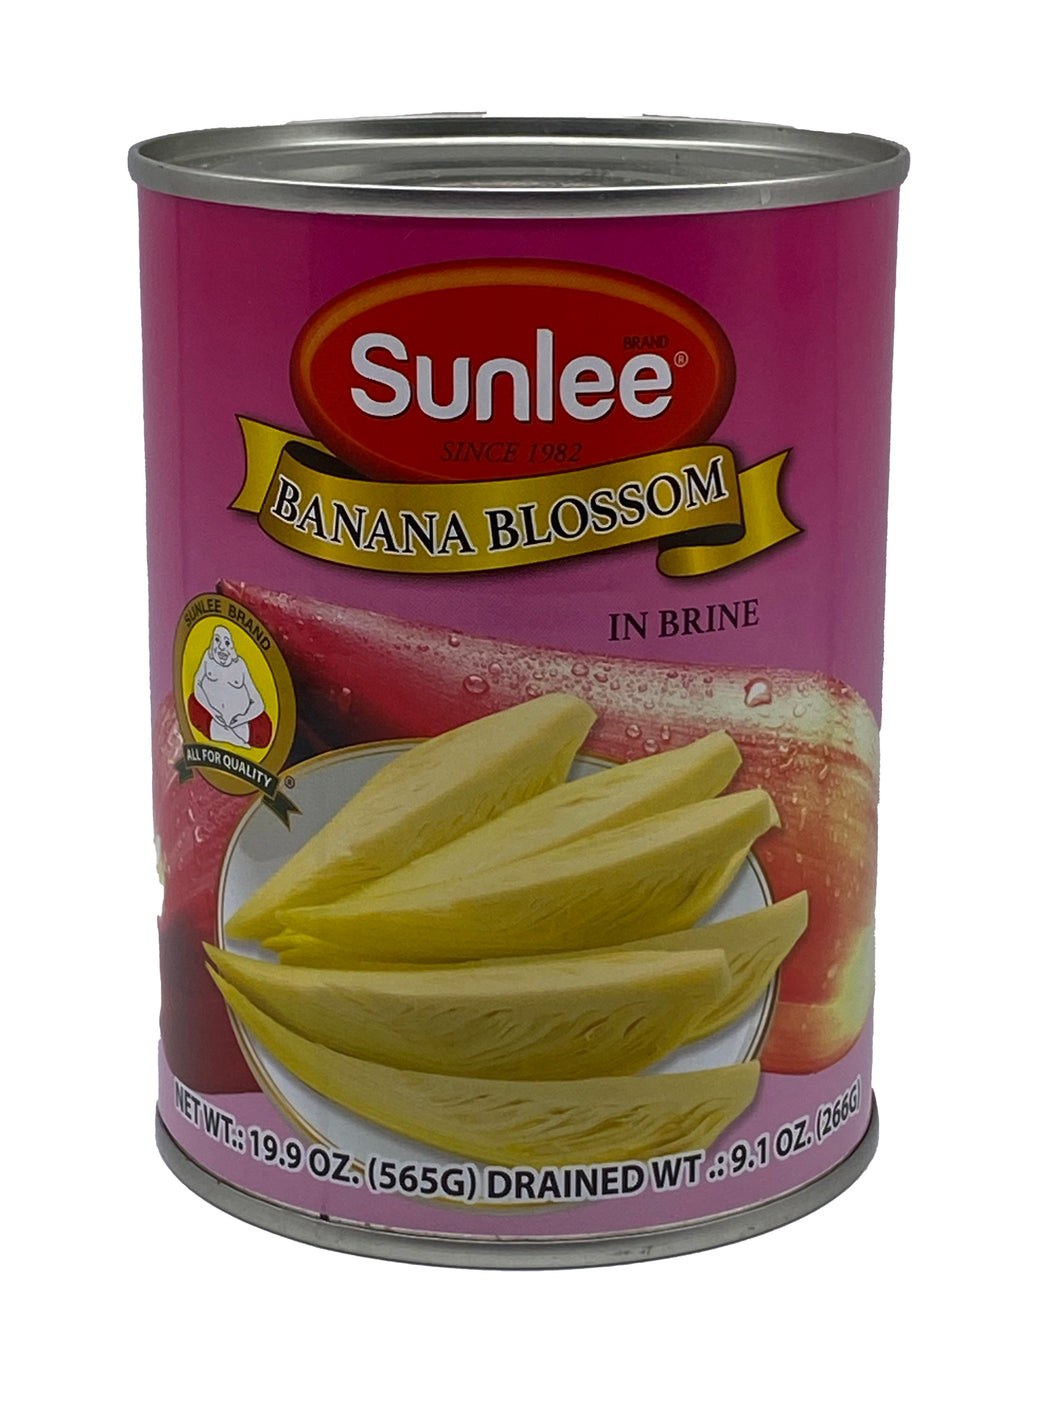 Sunlee Banana Blossom in Brine